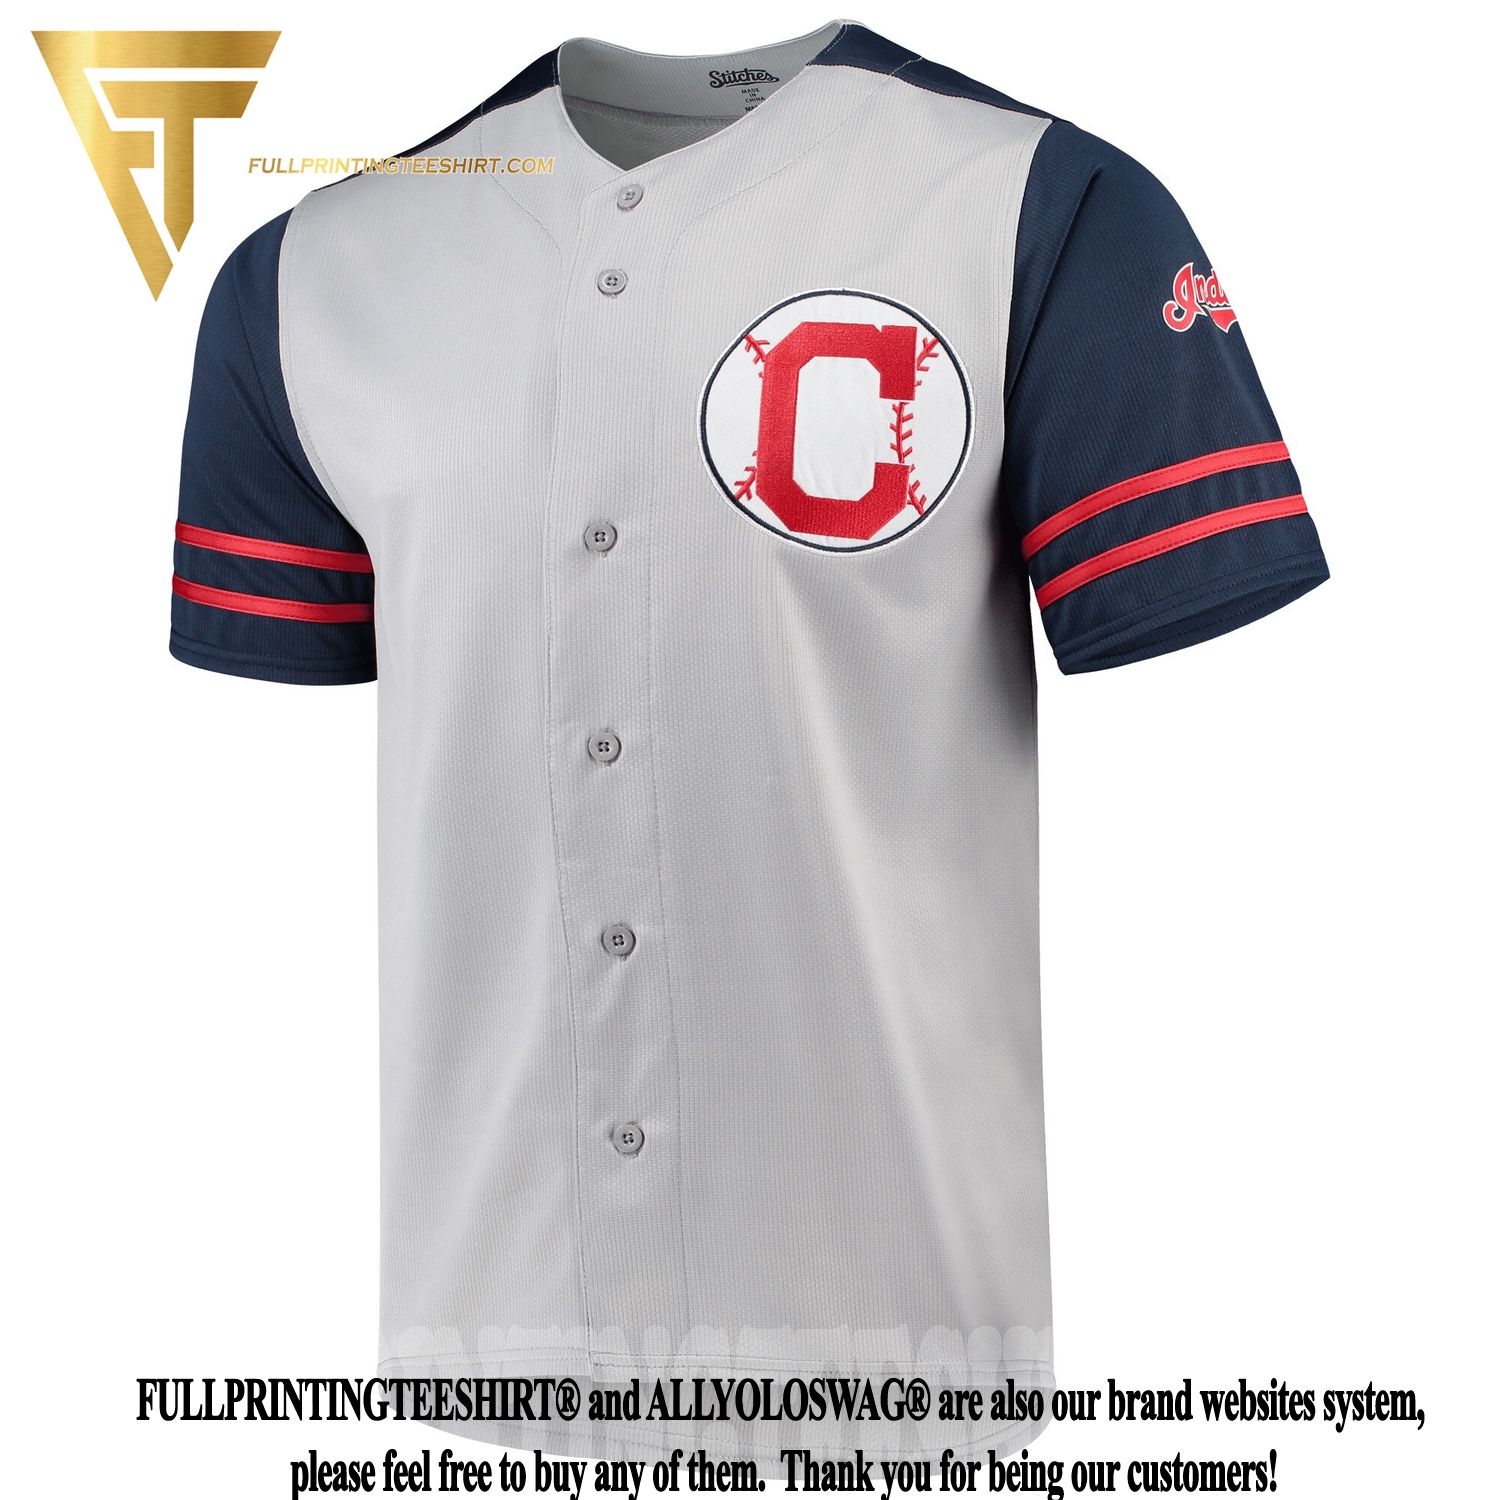 Youth Stitches Navy/White Cleveland Indians Team T-Shirt Combo Set